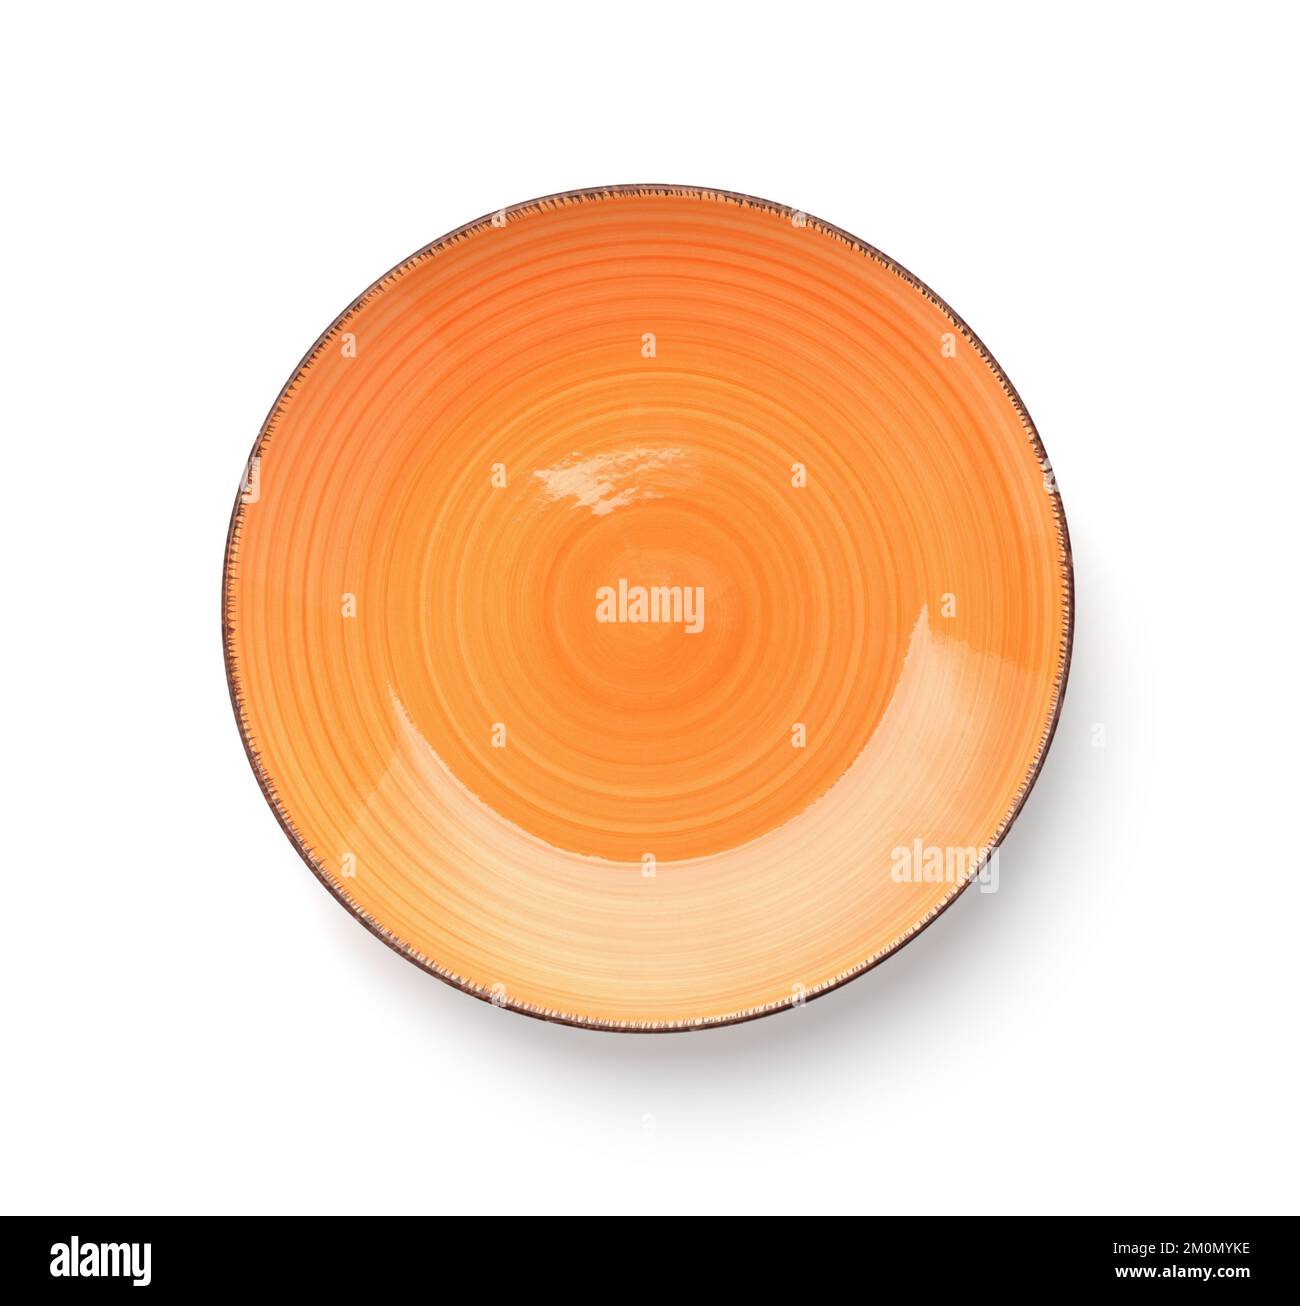 Top view of empty orange ceramic round plate with dark rim isolated on white Stock Photo